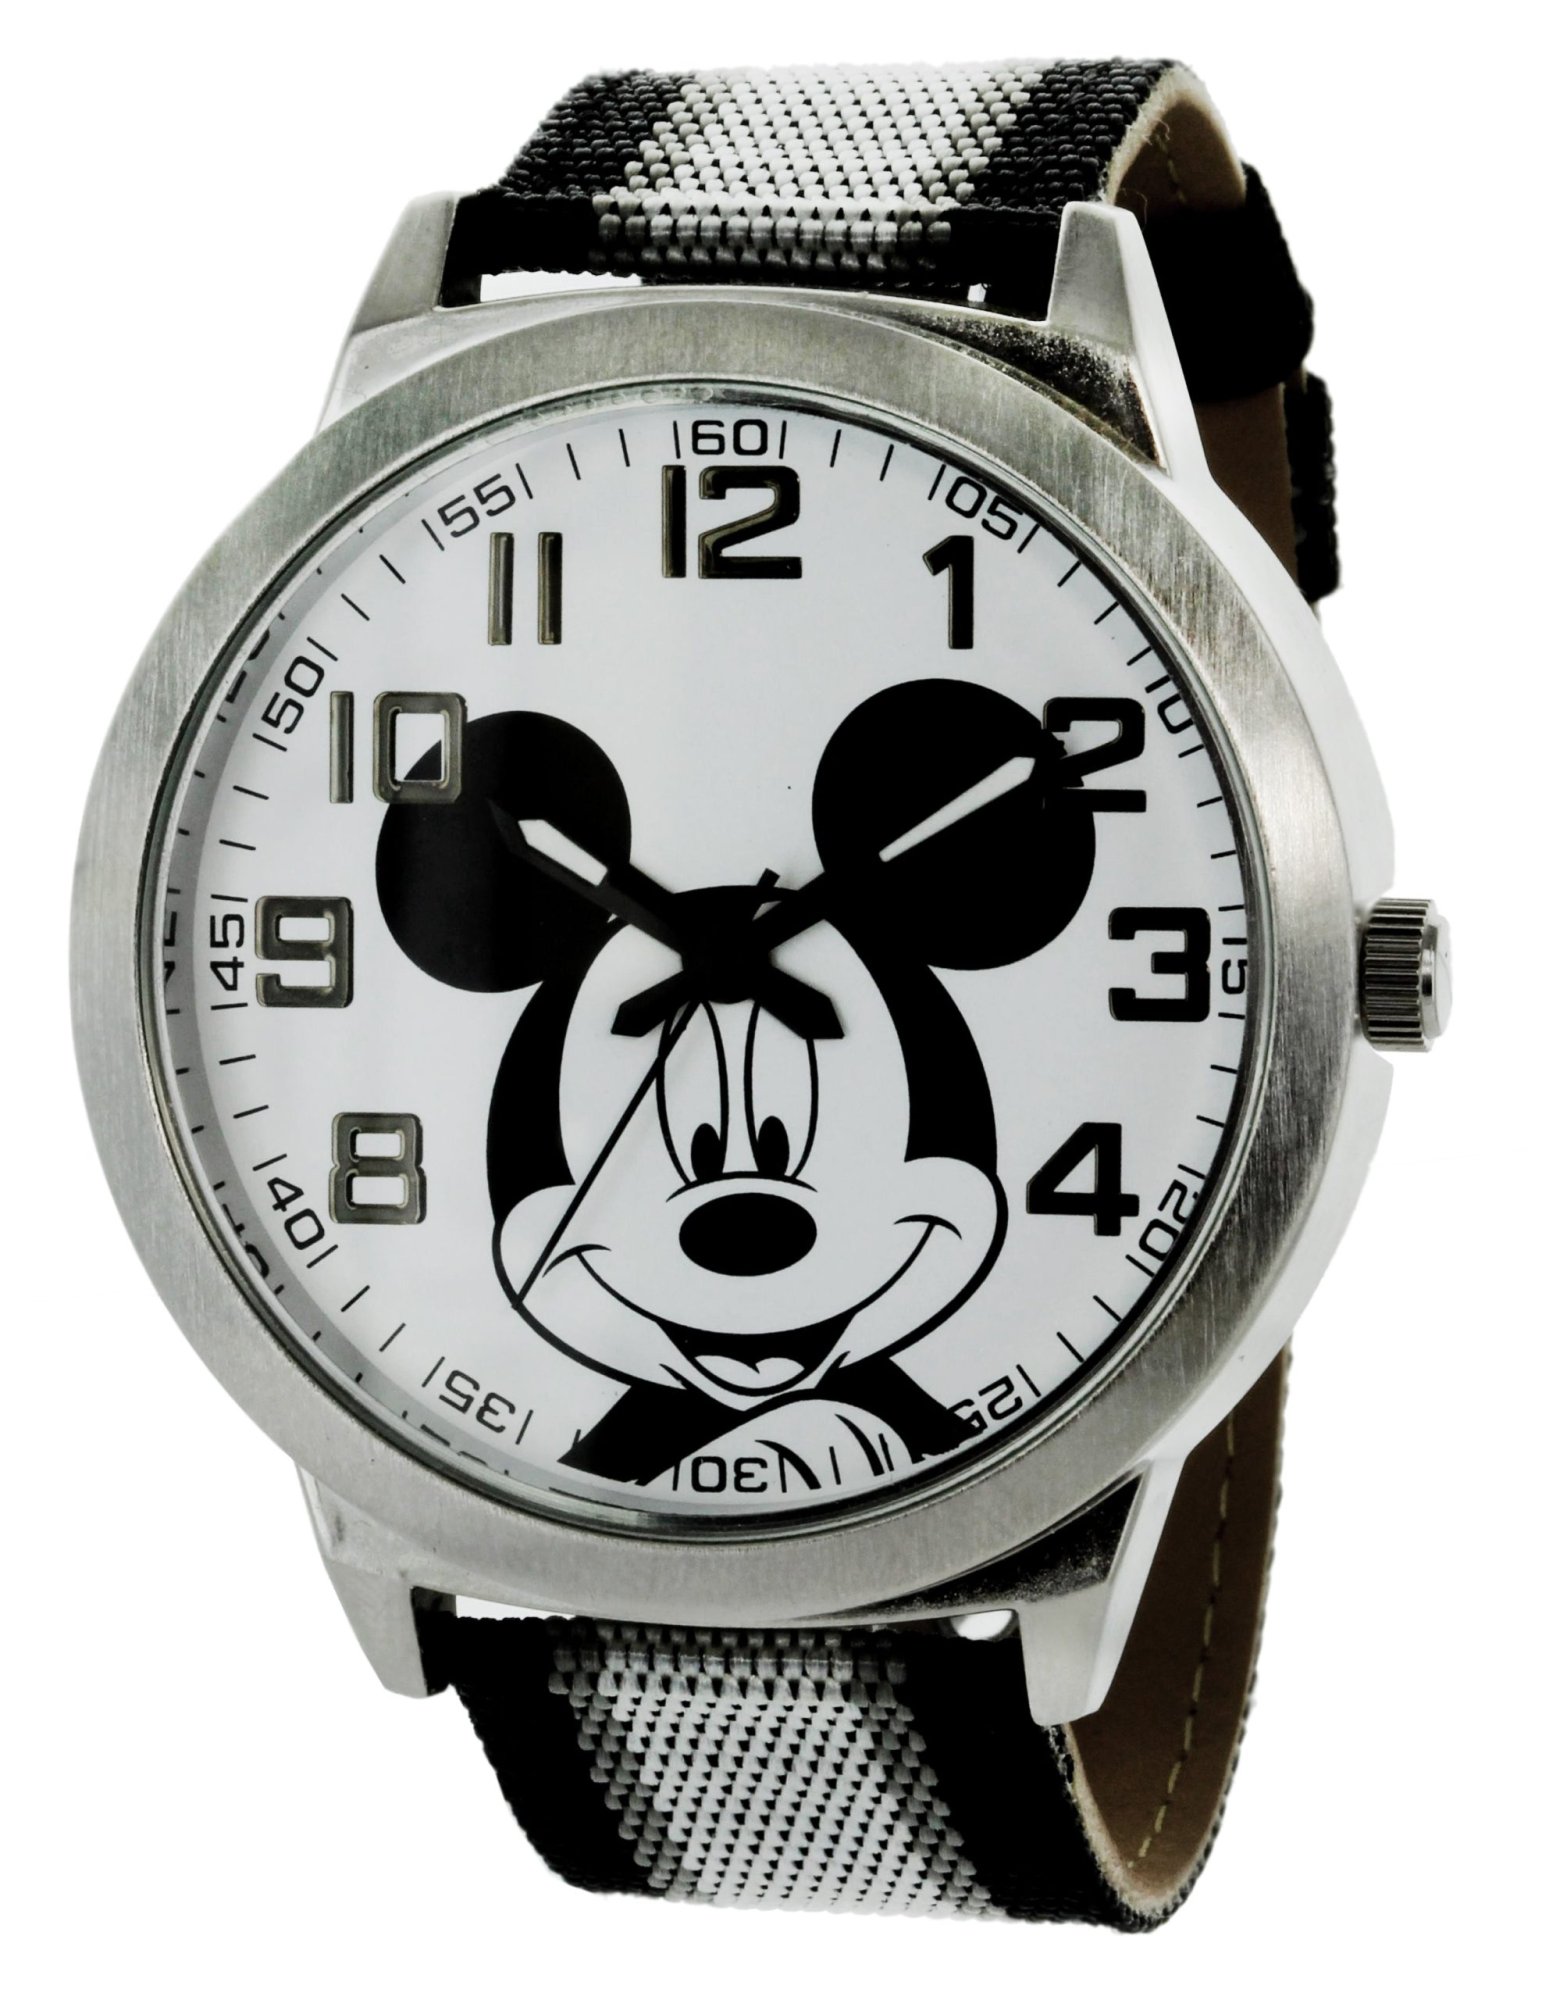 Model: Men's Disney Jumbo Mickey Mouse Quartz Watch